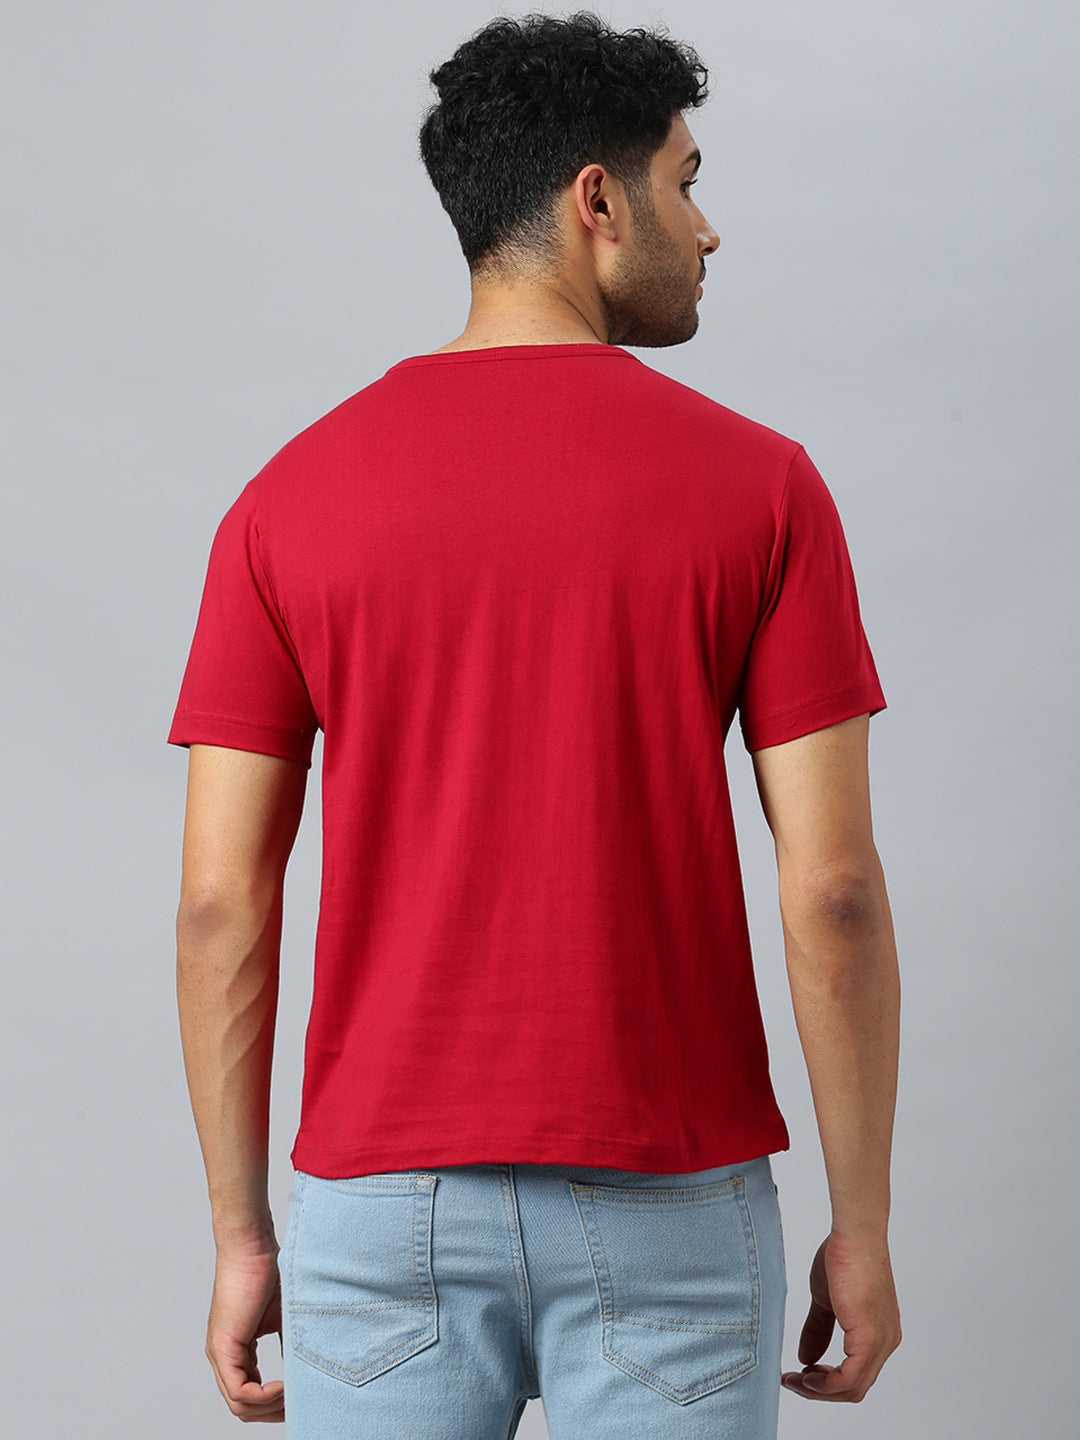 Don Vino Men's Red Solid Crew Neck T-Shirt